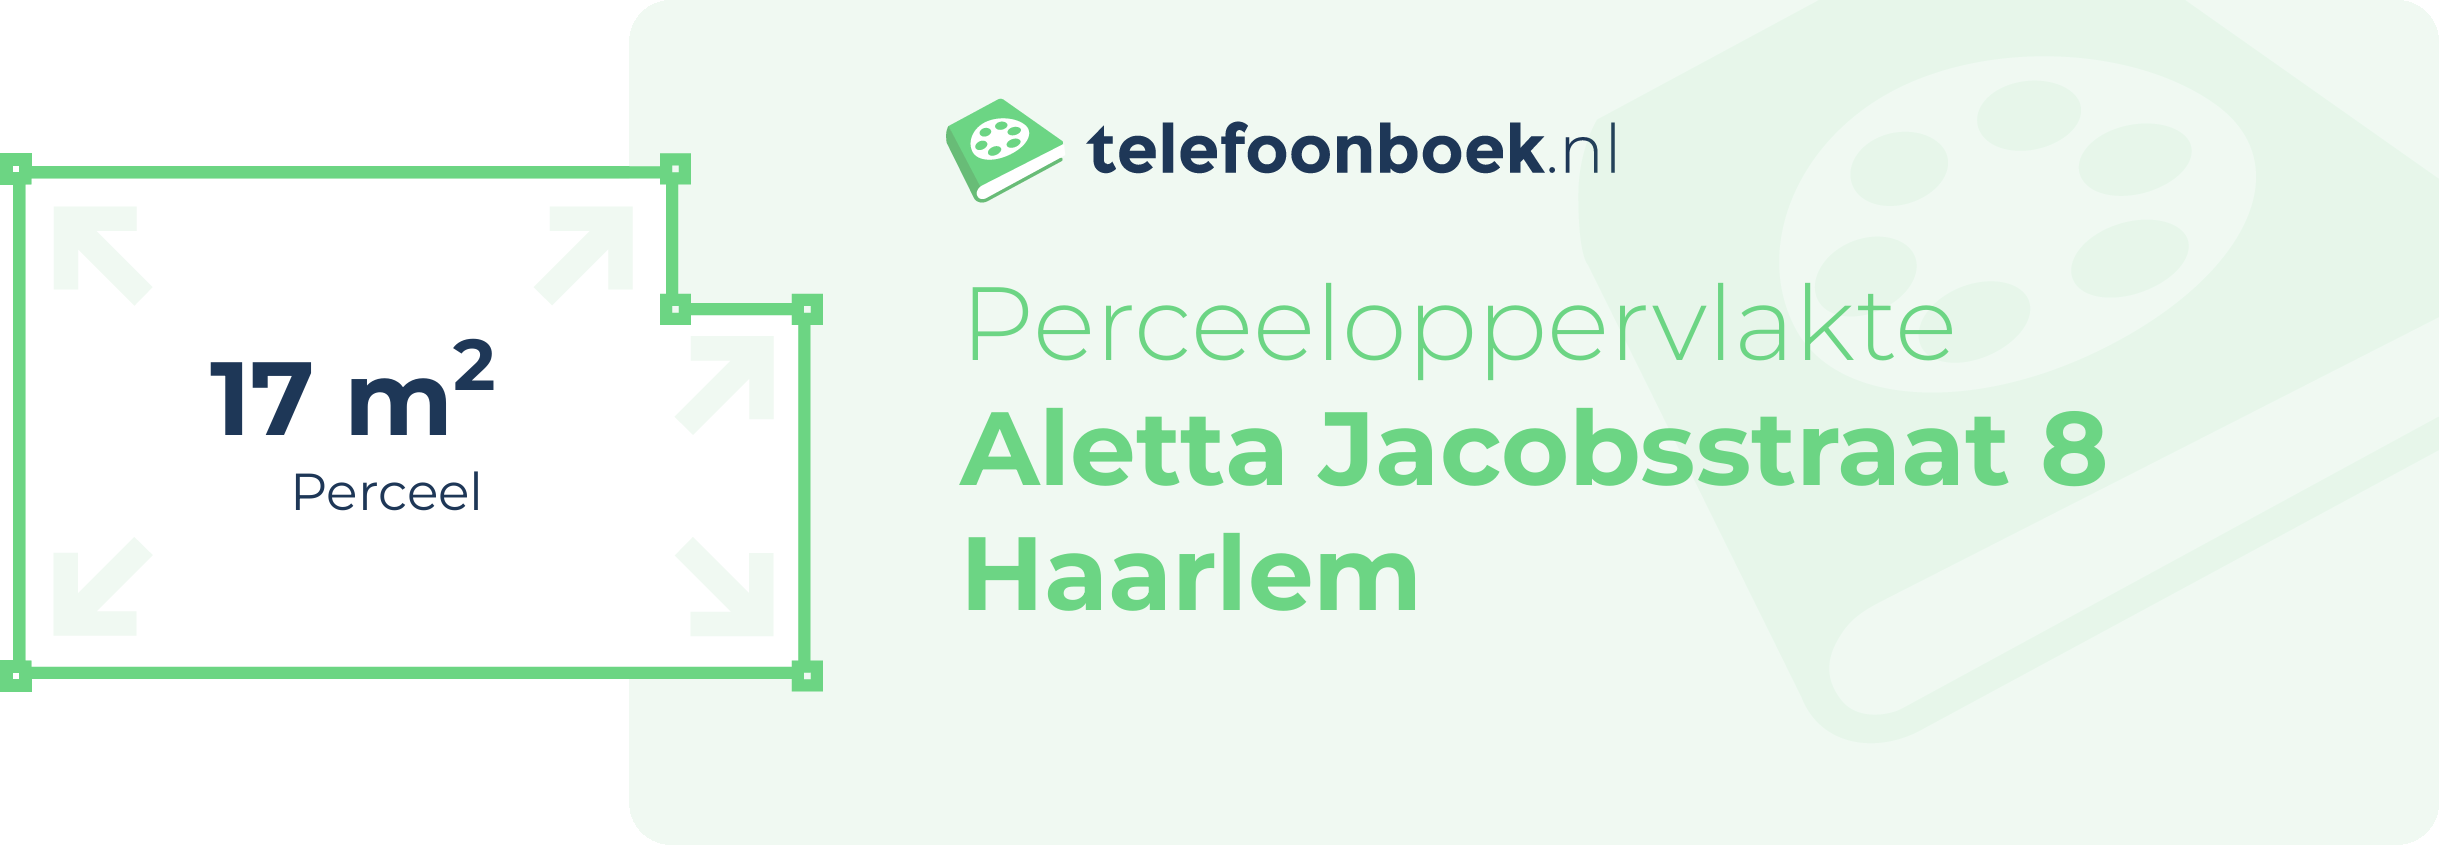 Perceeloppervlakte Aletta Jacobsstraat 8 Haarlem